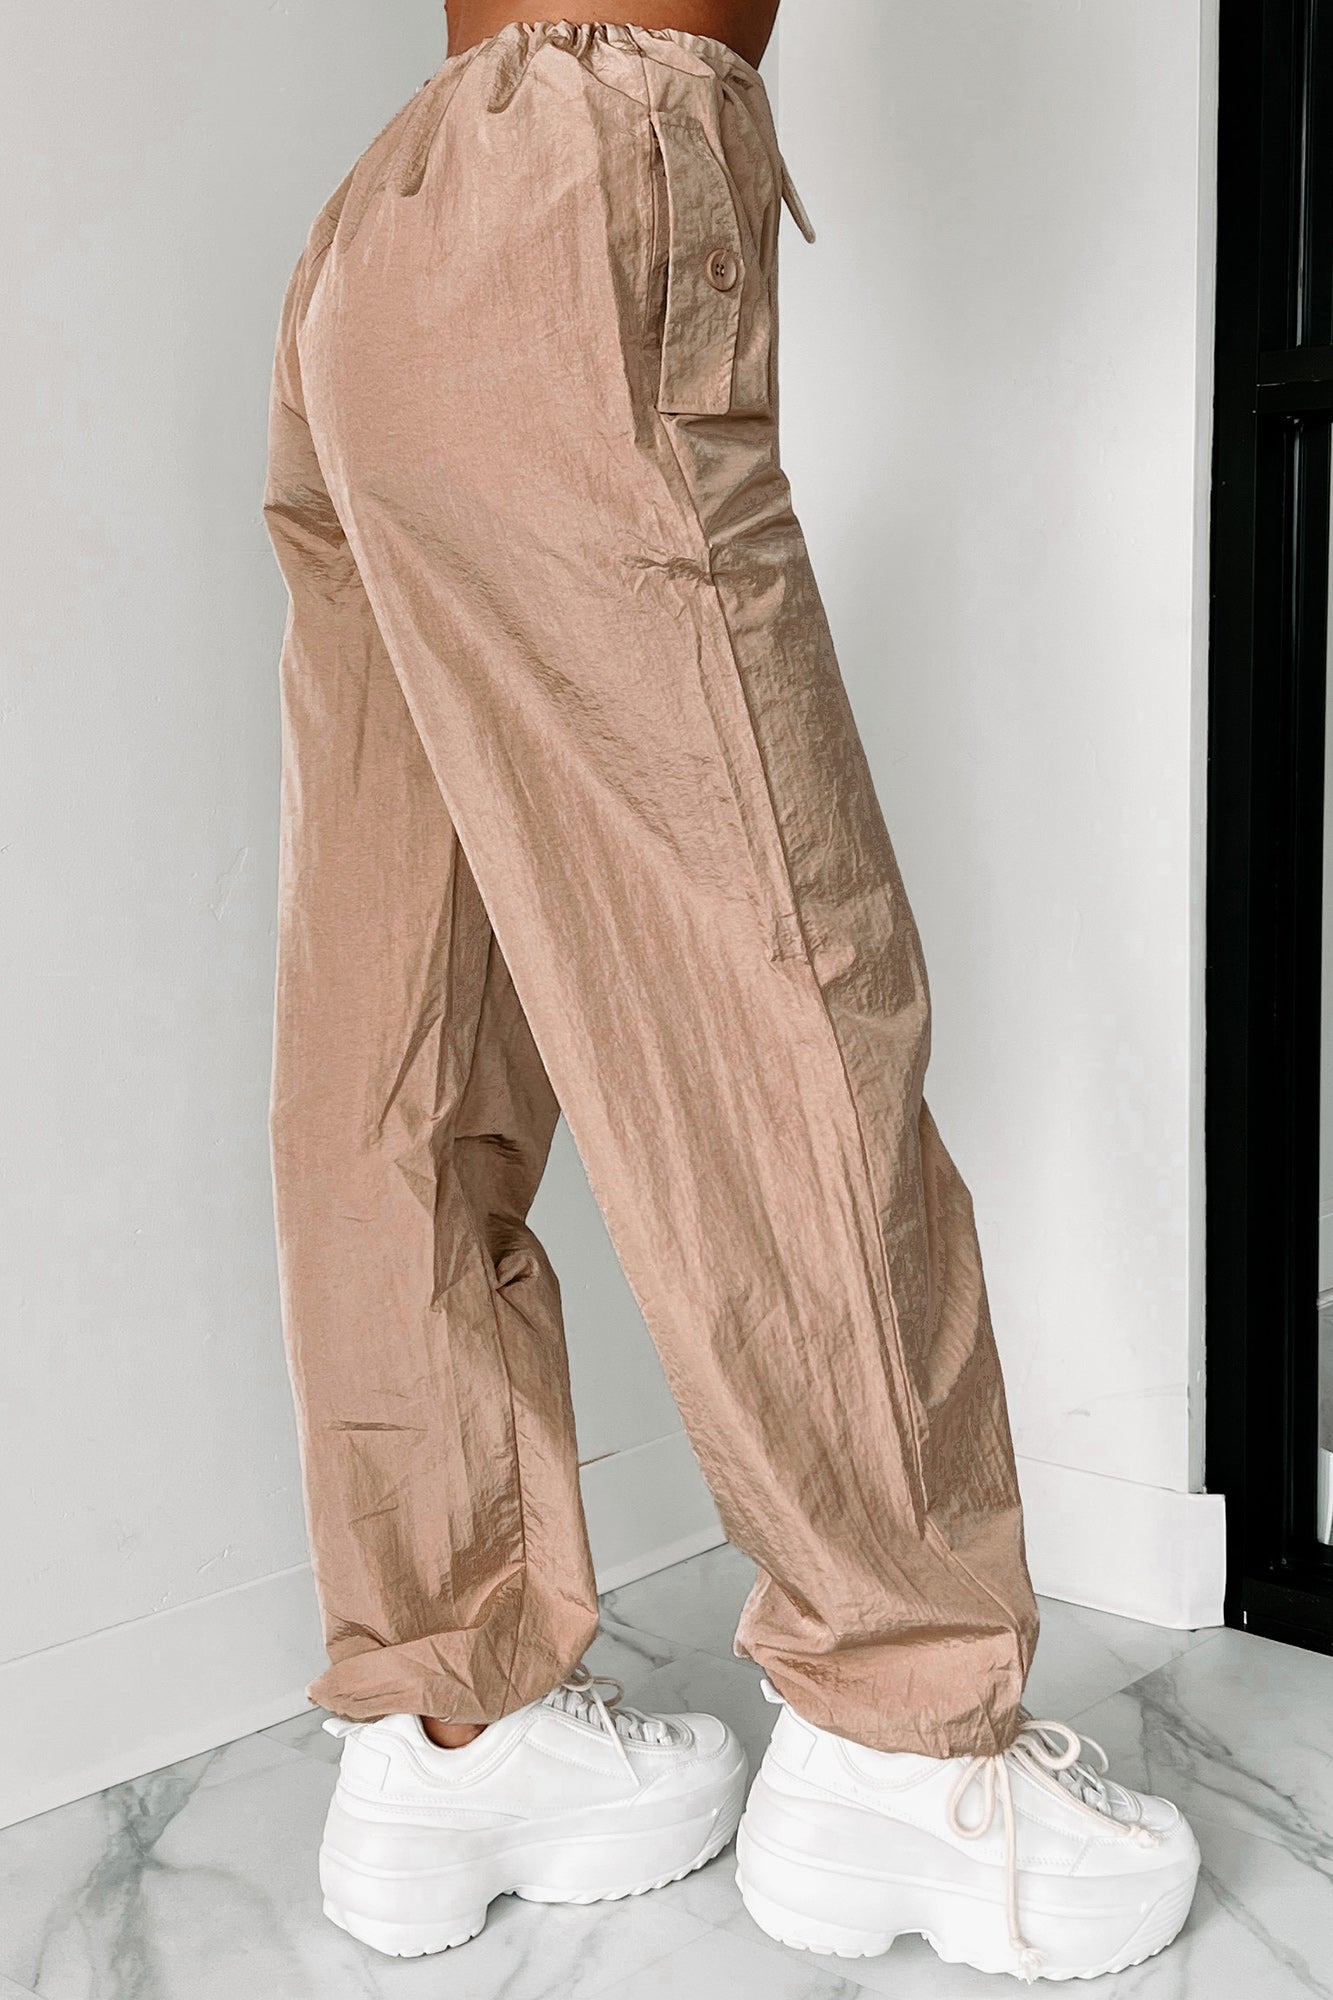 Jet Black Nylon Sweatpants Small Baggy Fit Track Pants Mesh Lined Cabelas